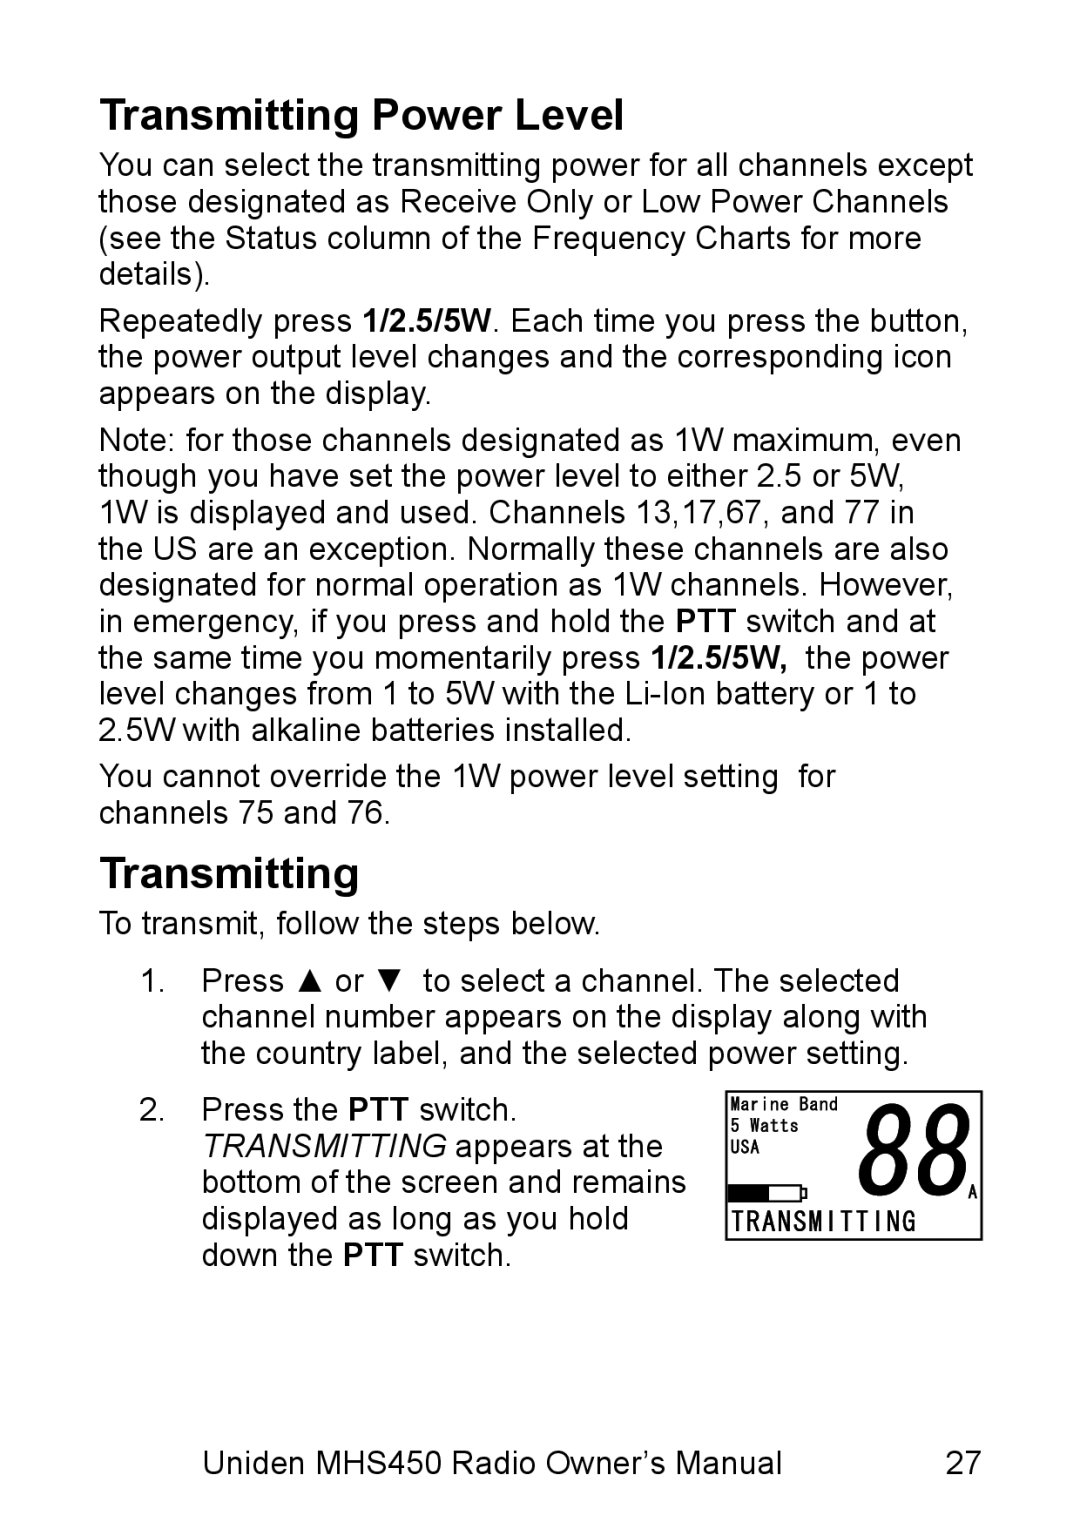 Uniden MHS450 owner manual Transmitting Power Level 